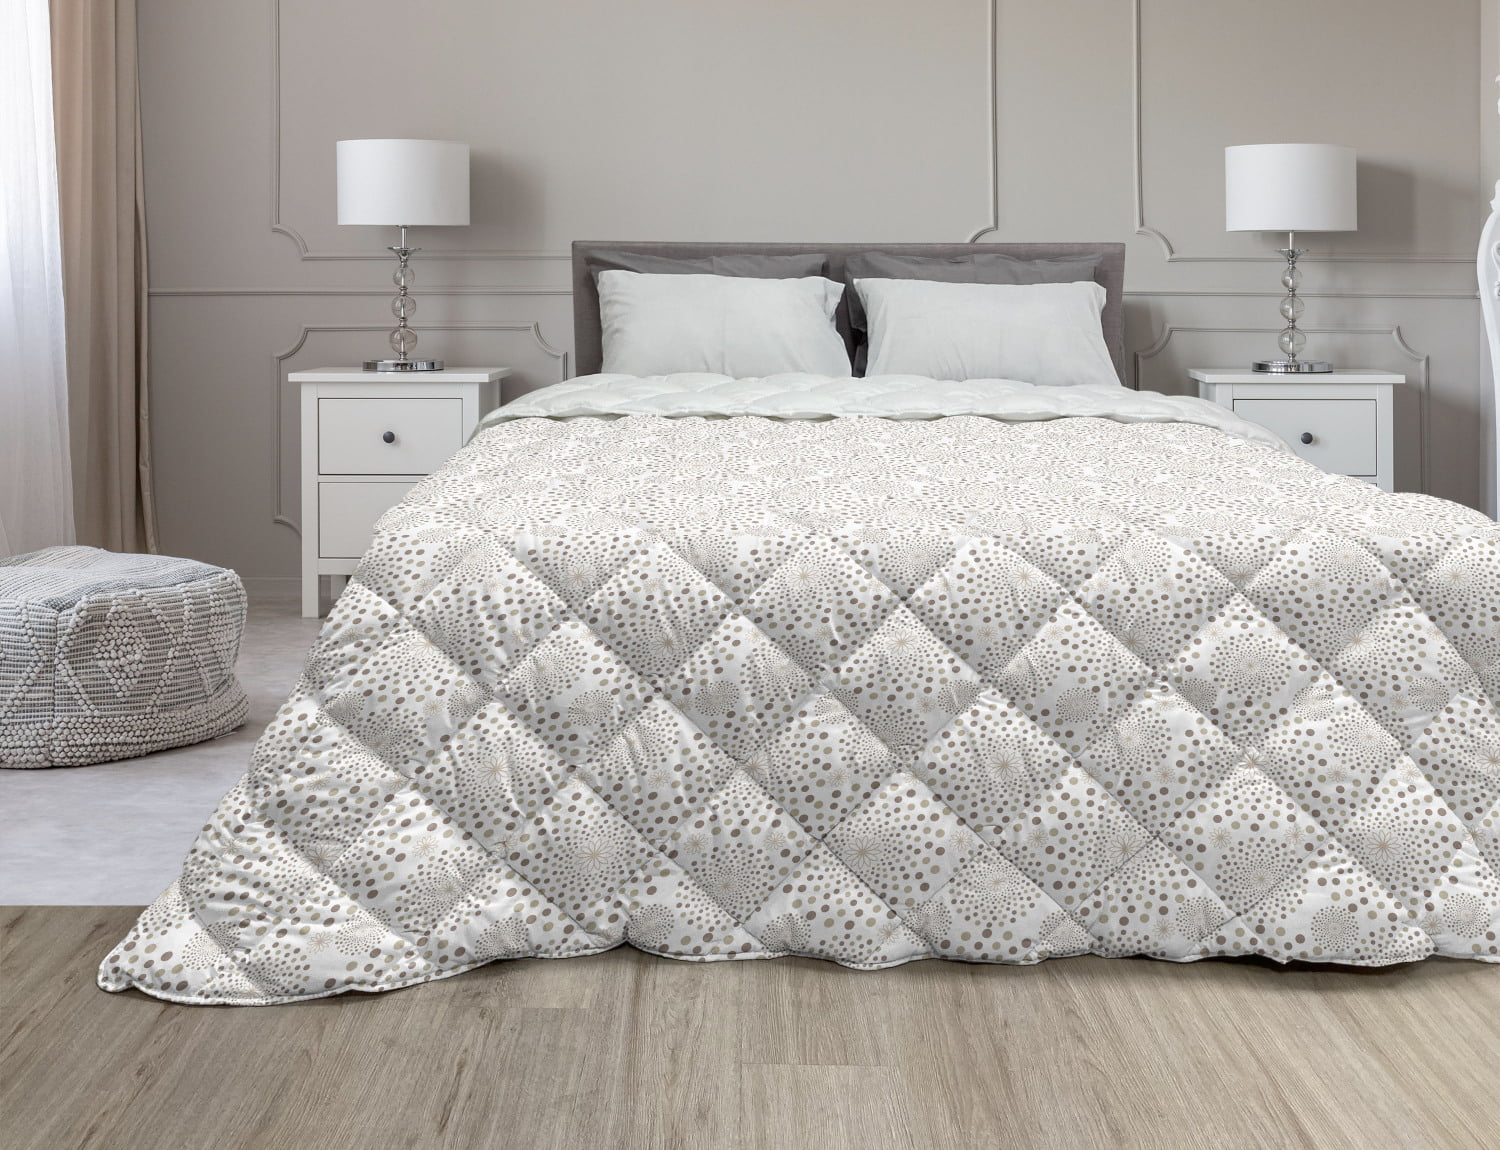 Details about   Fish Scale Pillow Sham Decorative Pillowcase 3 Sizes Bedroom Decor Ambesonne 